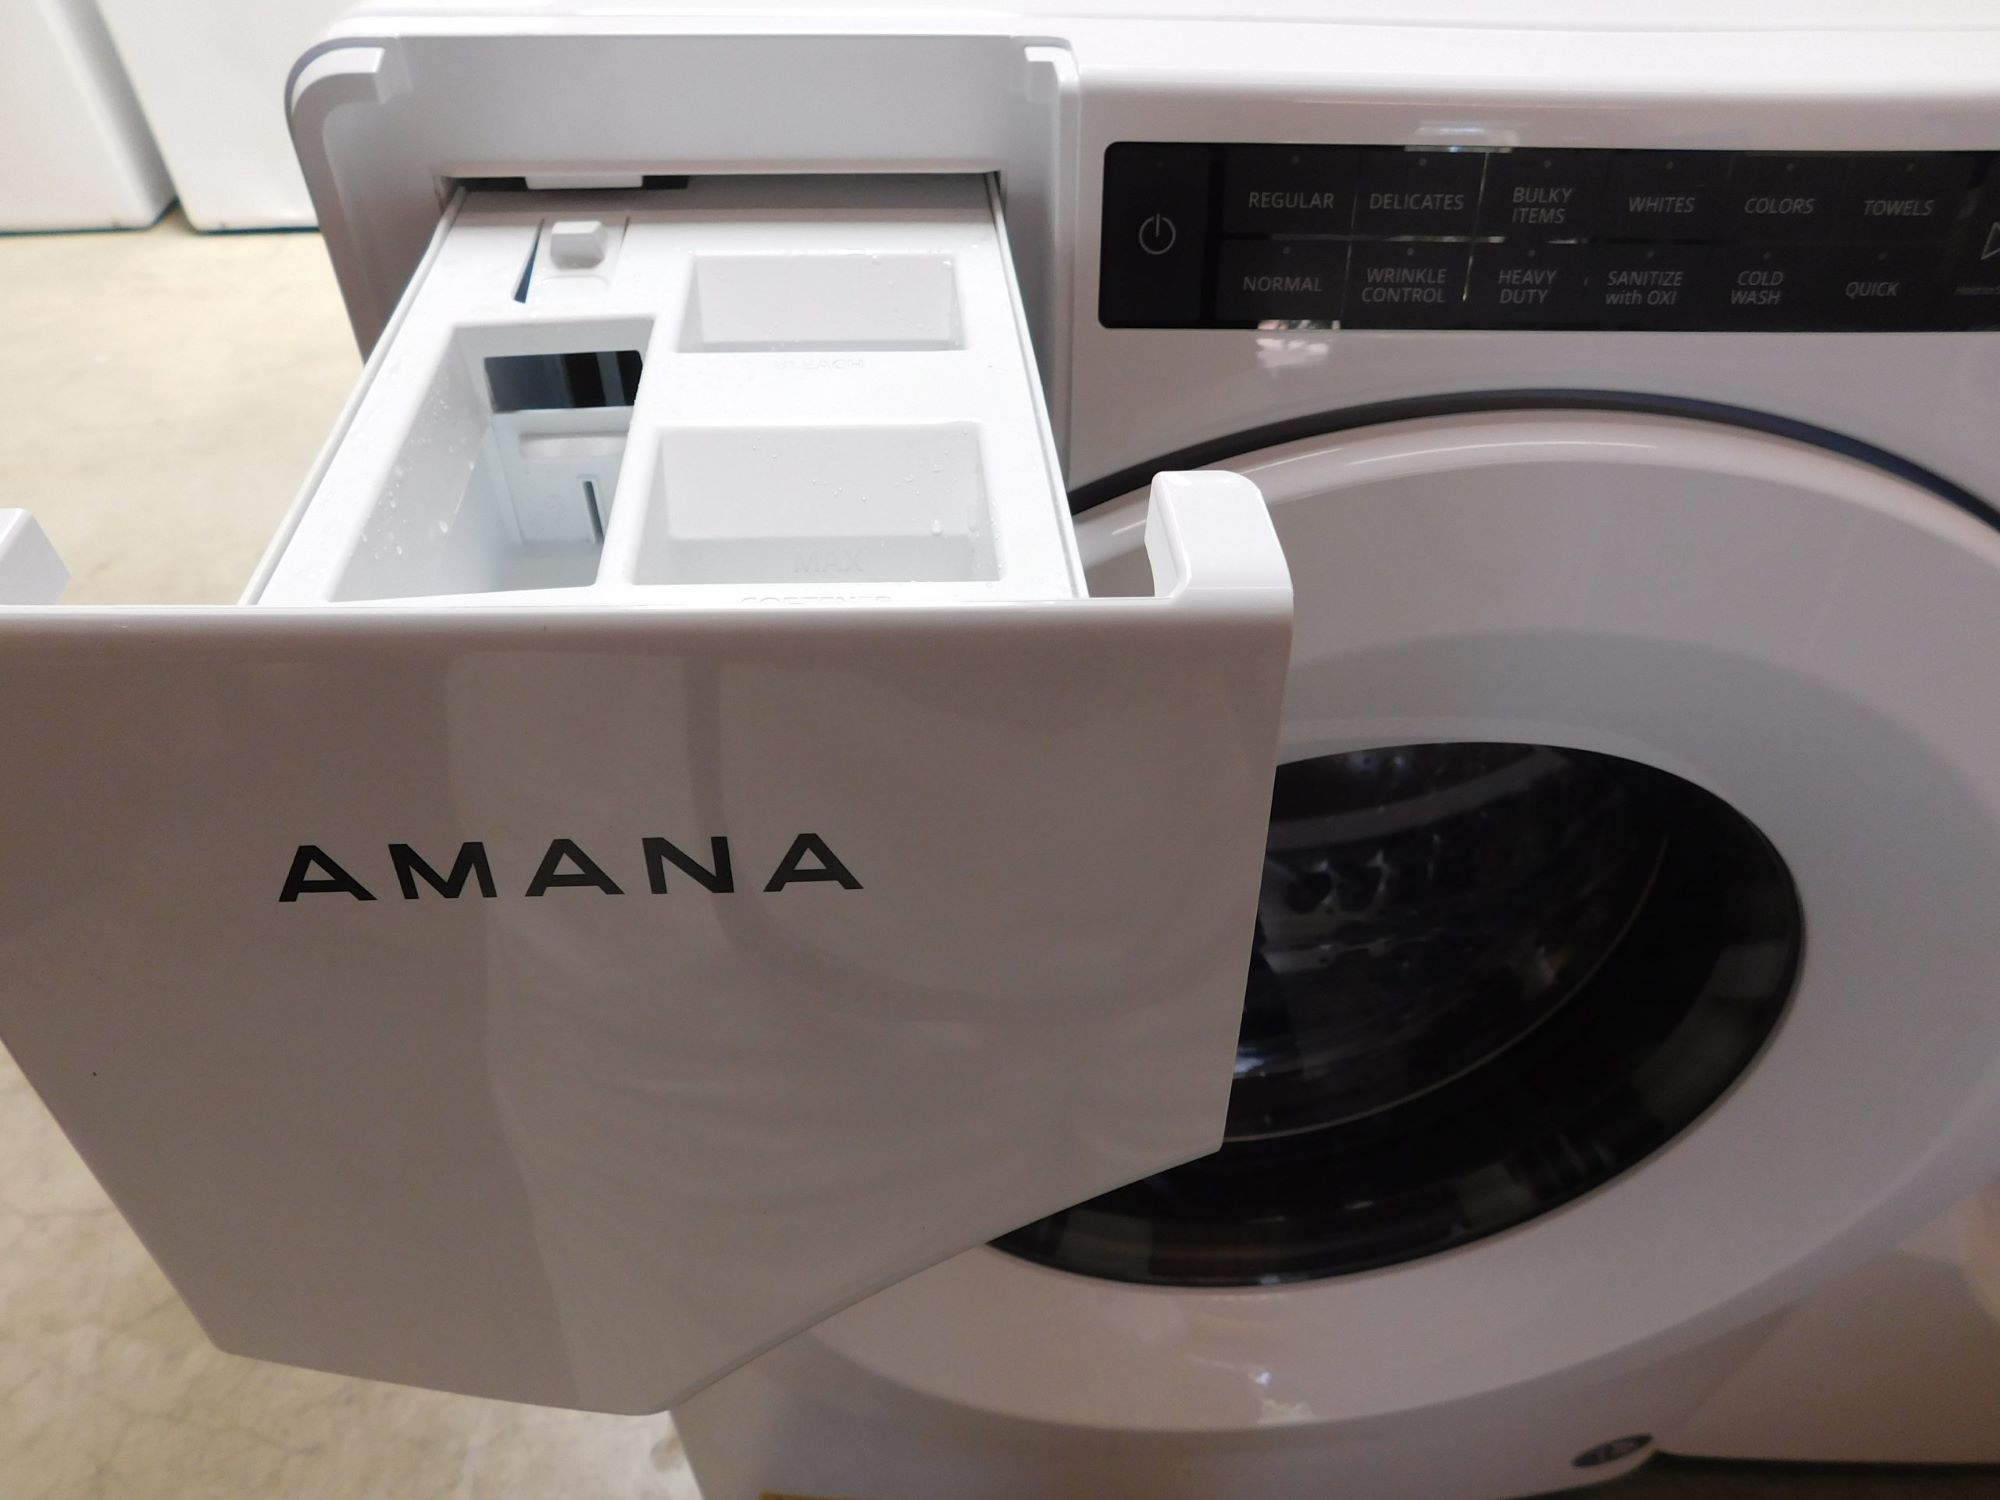 How To Use My Amana Washing Machine